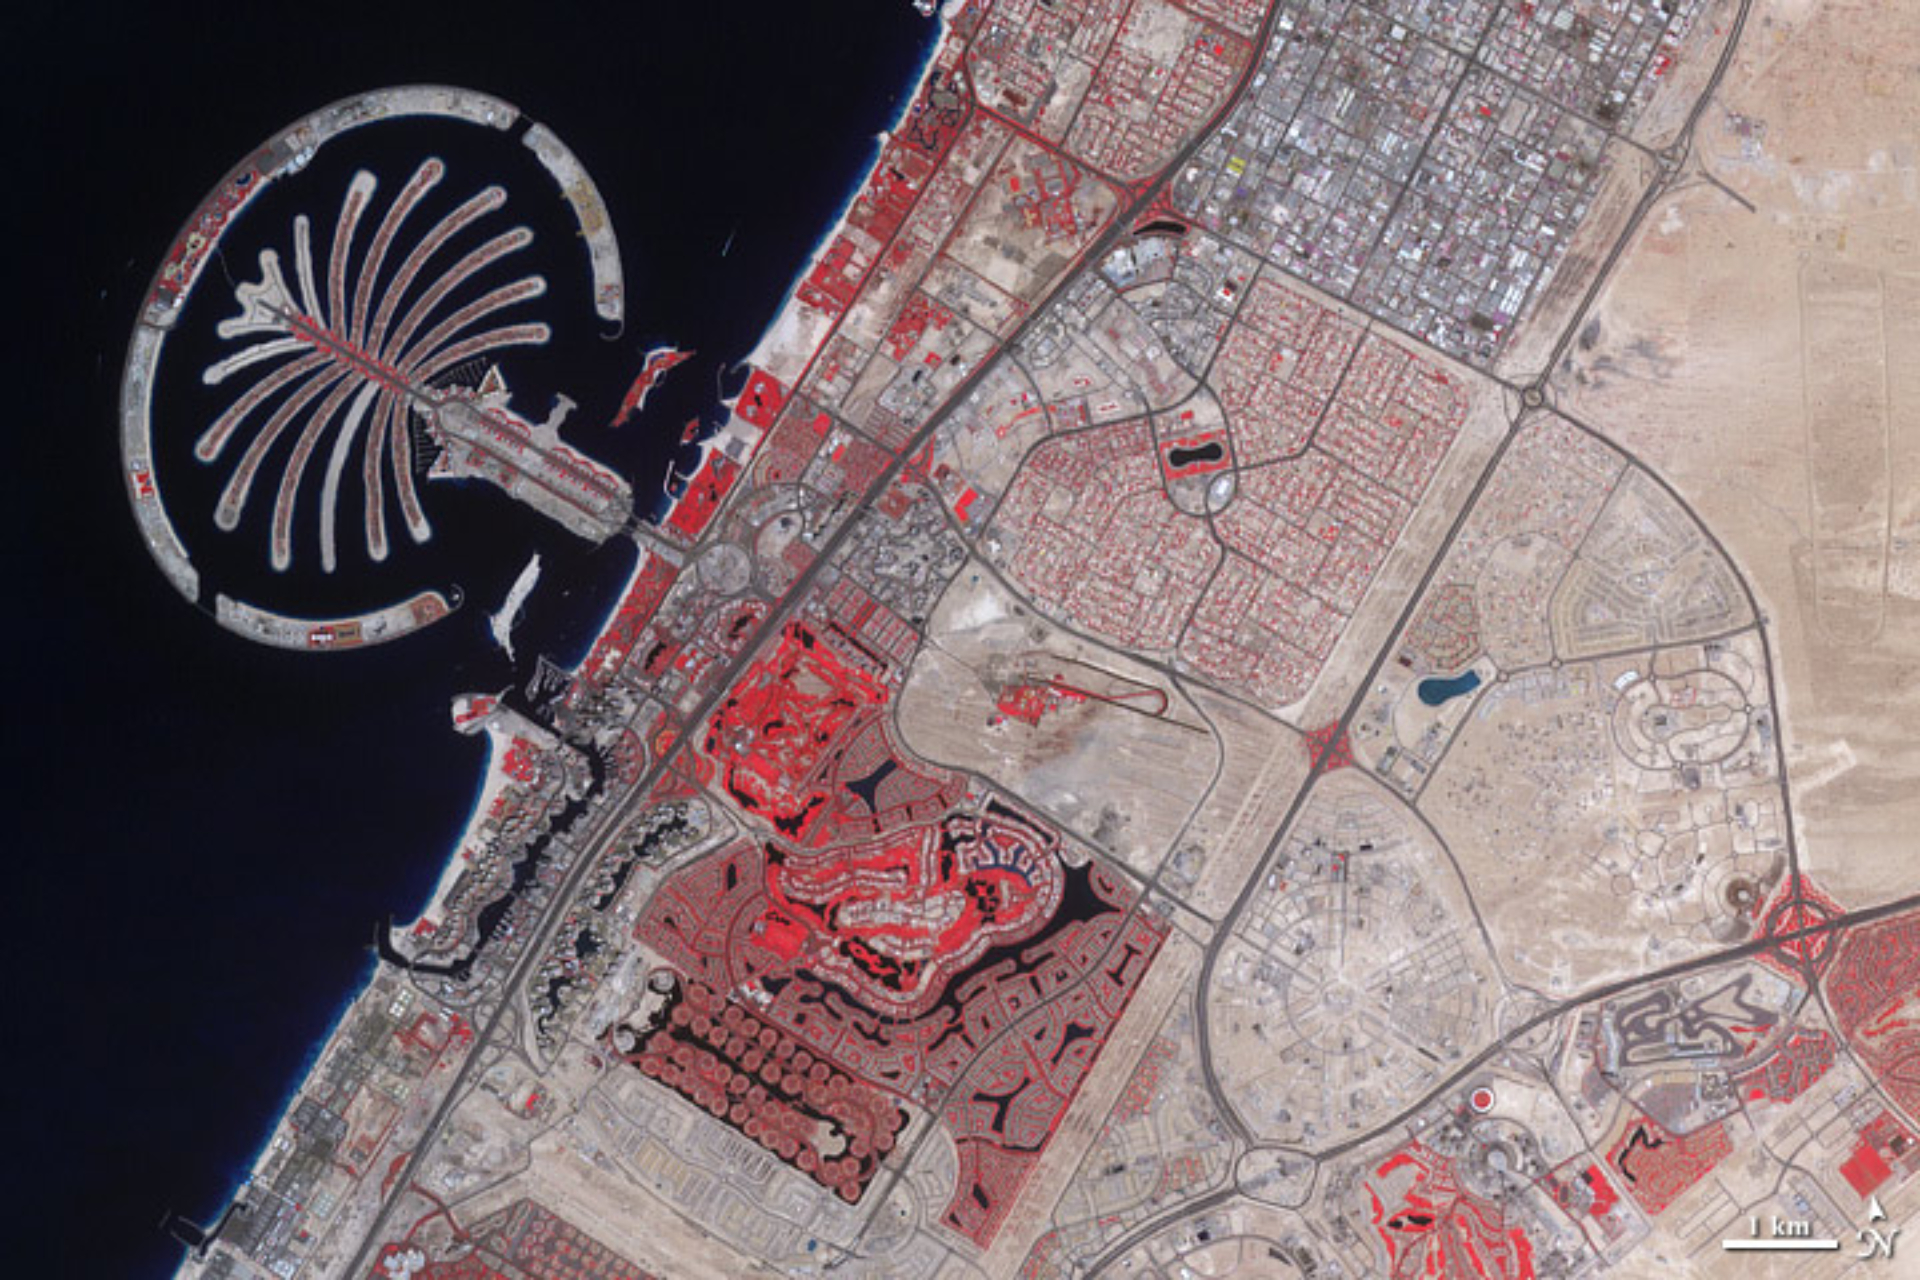 Dubai (Emirati Arabi Uniti) – 2011